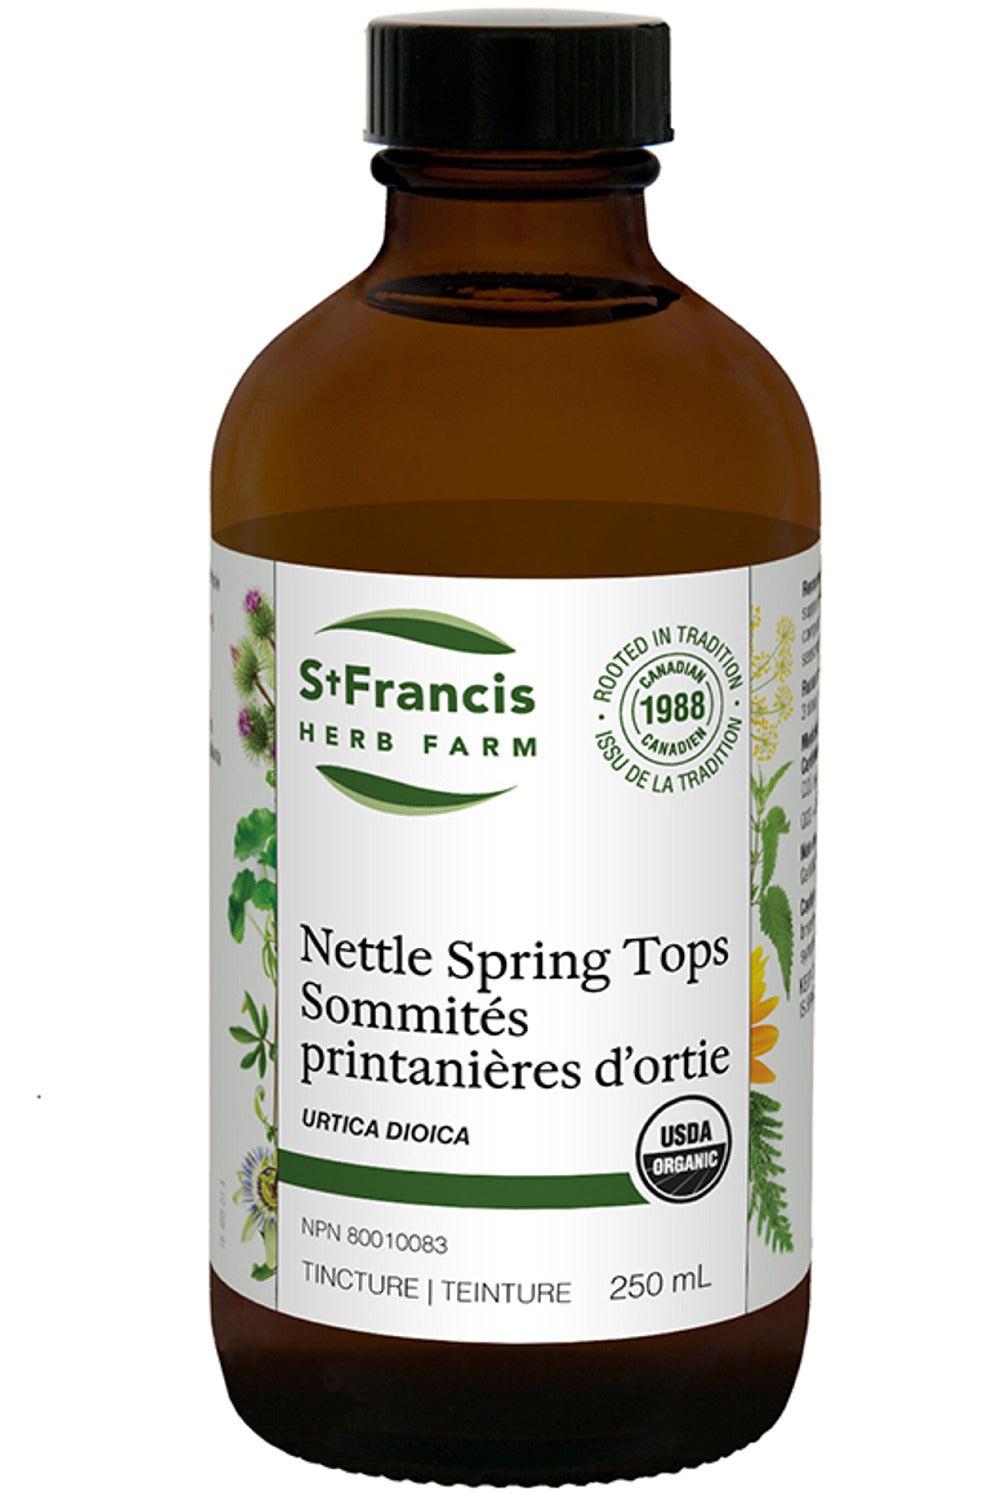 ST FRANCIS HERB FARM Nettle Spring Tops (250 ml)